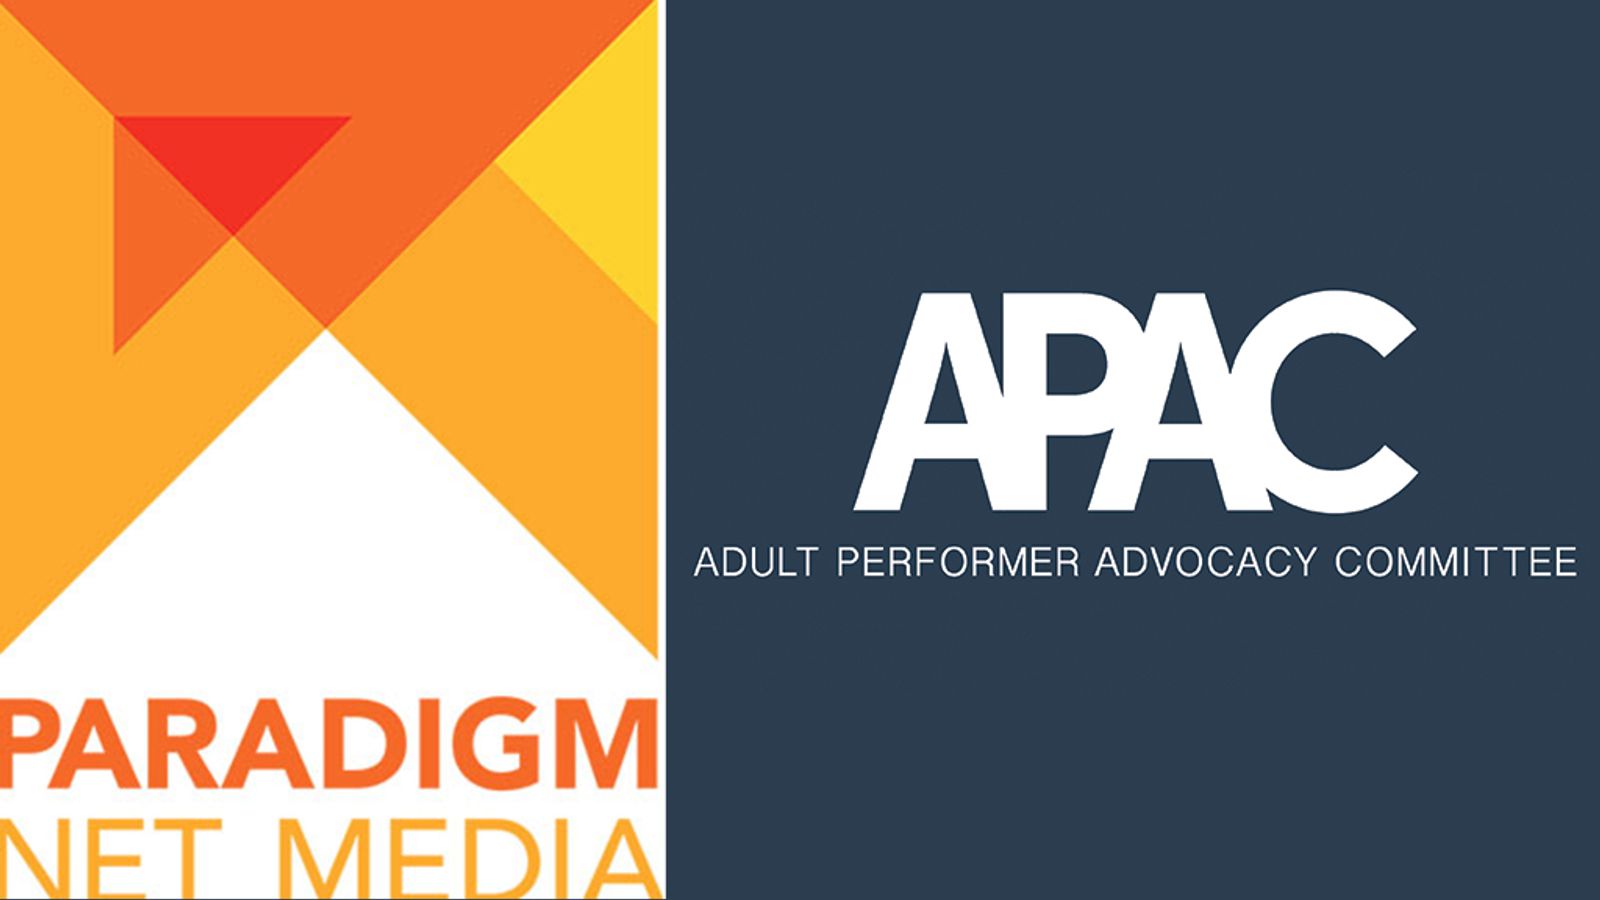 Paradigm Net Media to Host VR Workshop for APAC Members